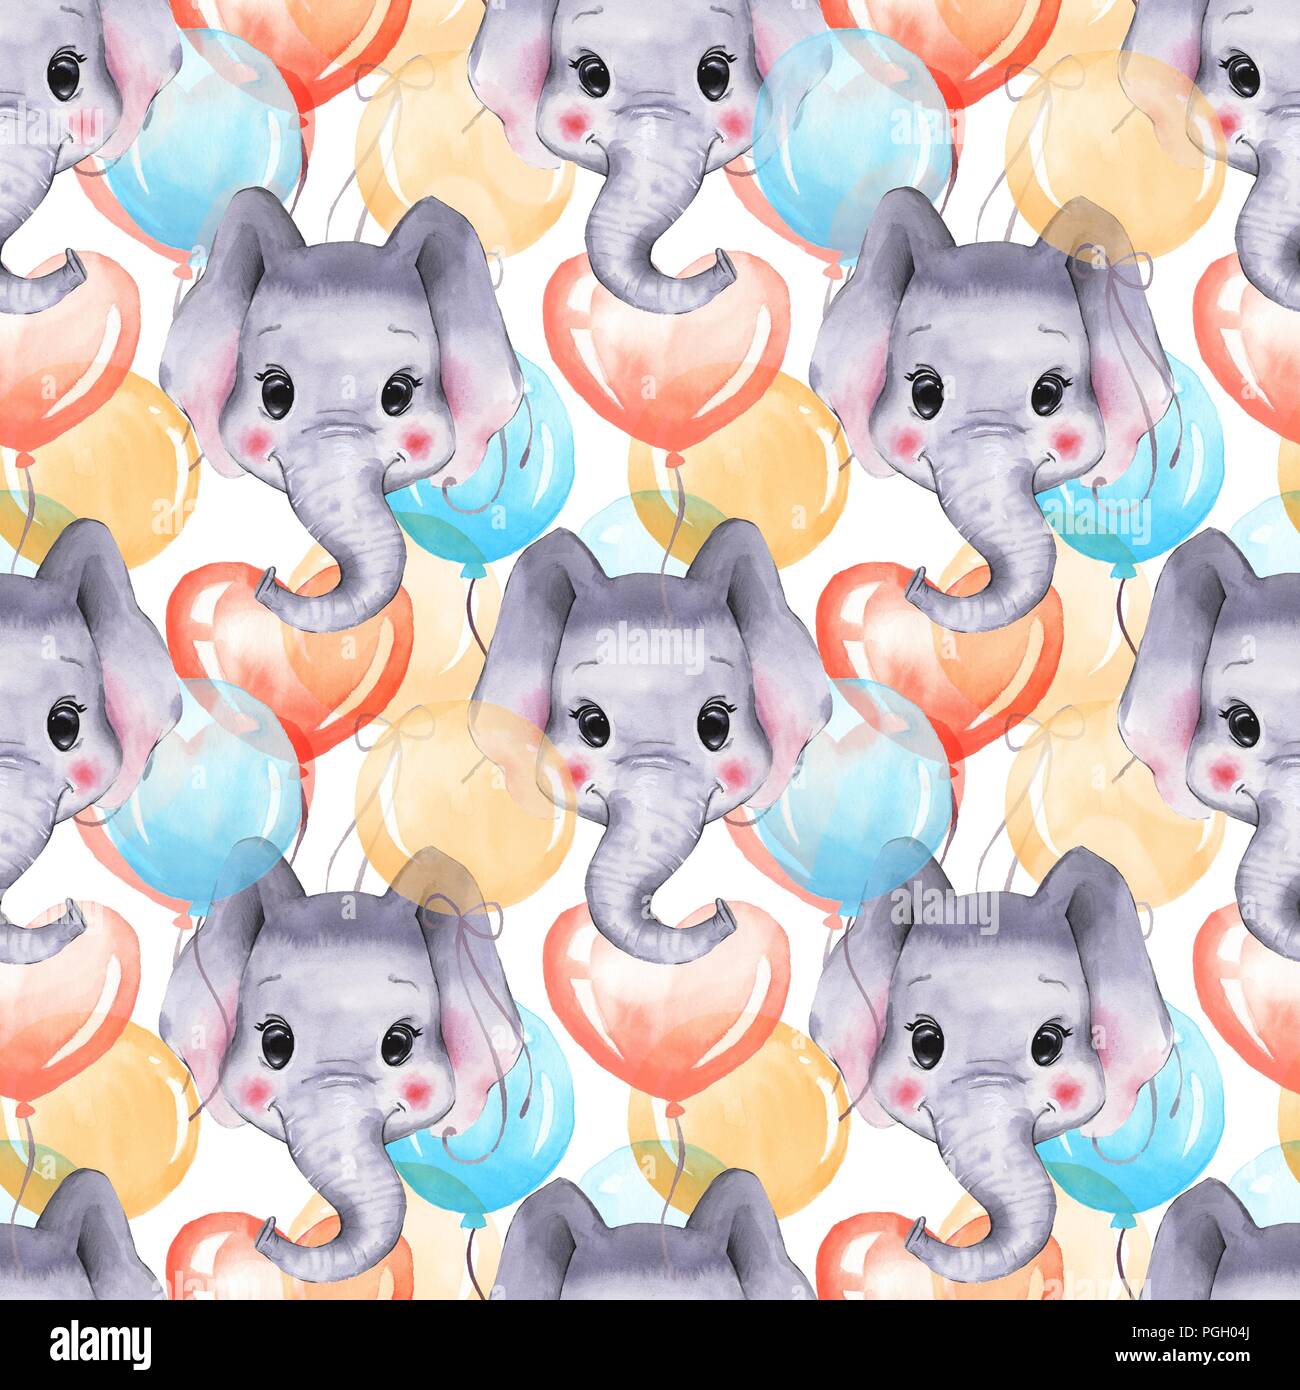 Seamless pattern with elephants. Cute cartoon background Stock Photo